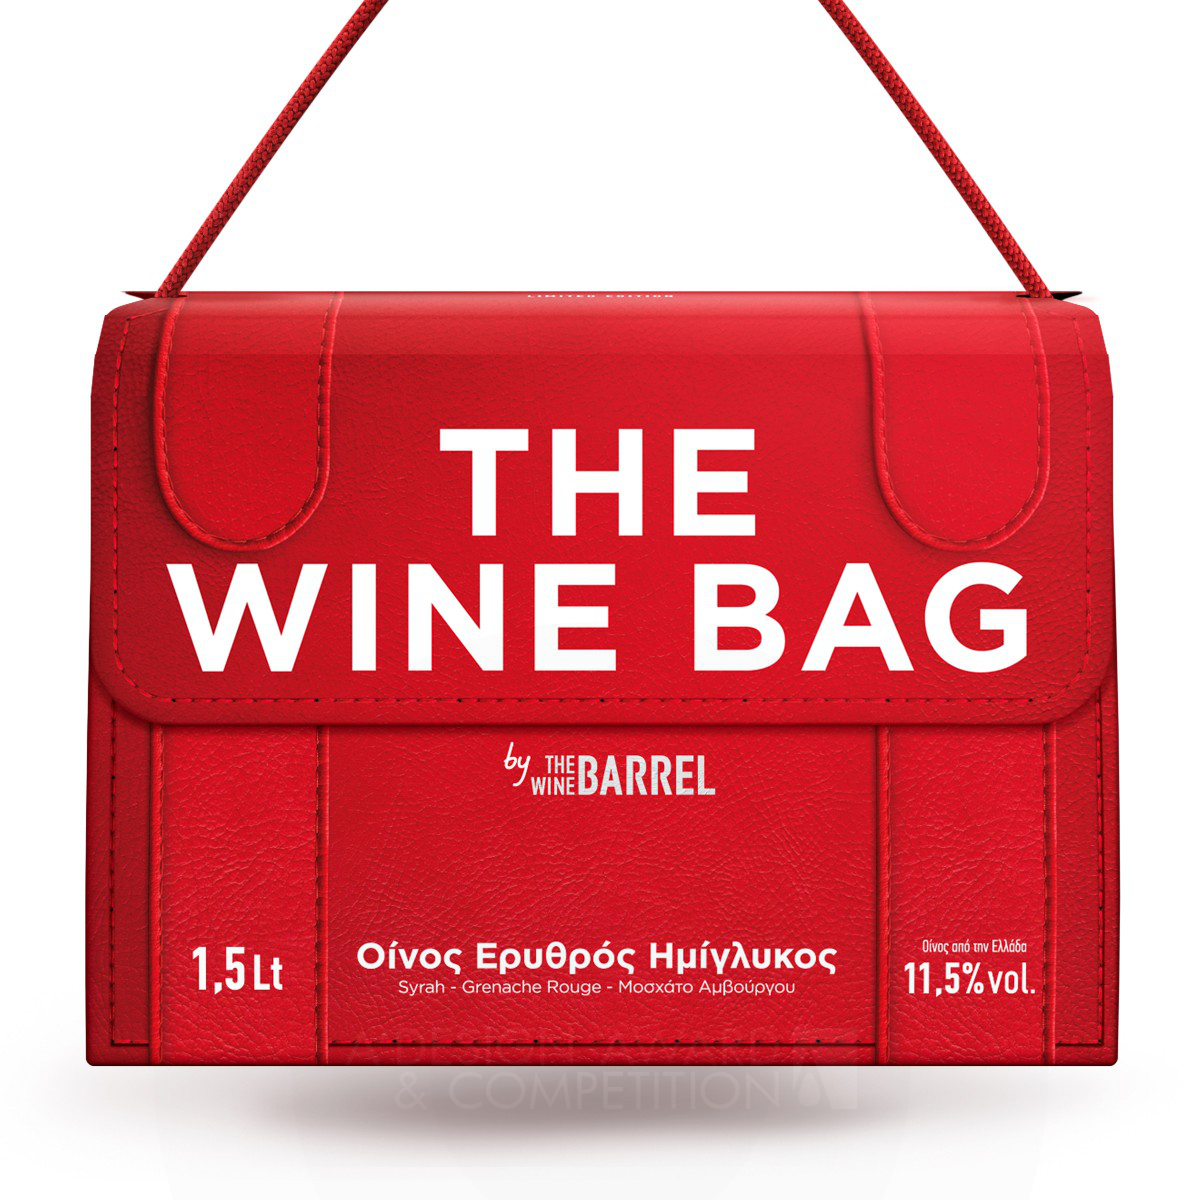 Antonia Skaraki wins Bronze at the prestigious A' Packaging Design Award with The Wine Bag Packaging.